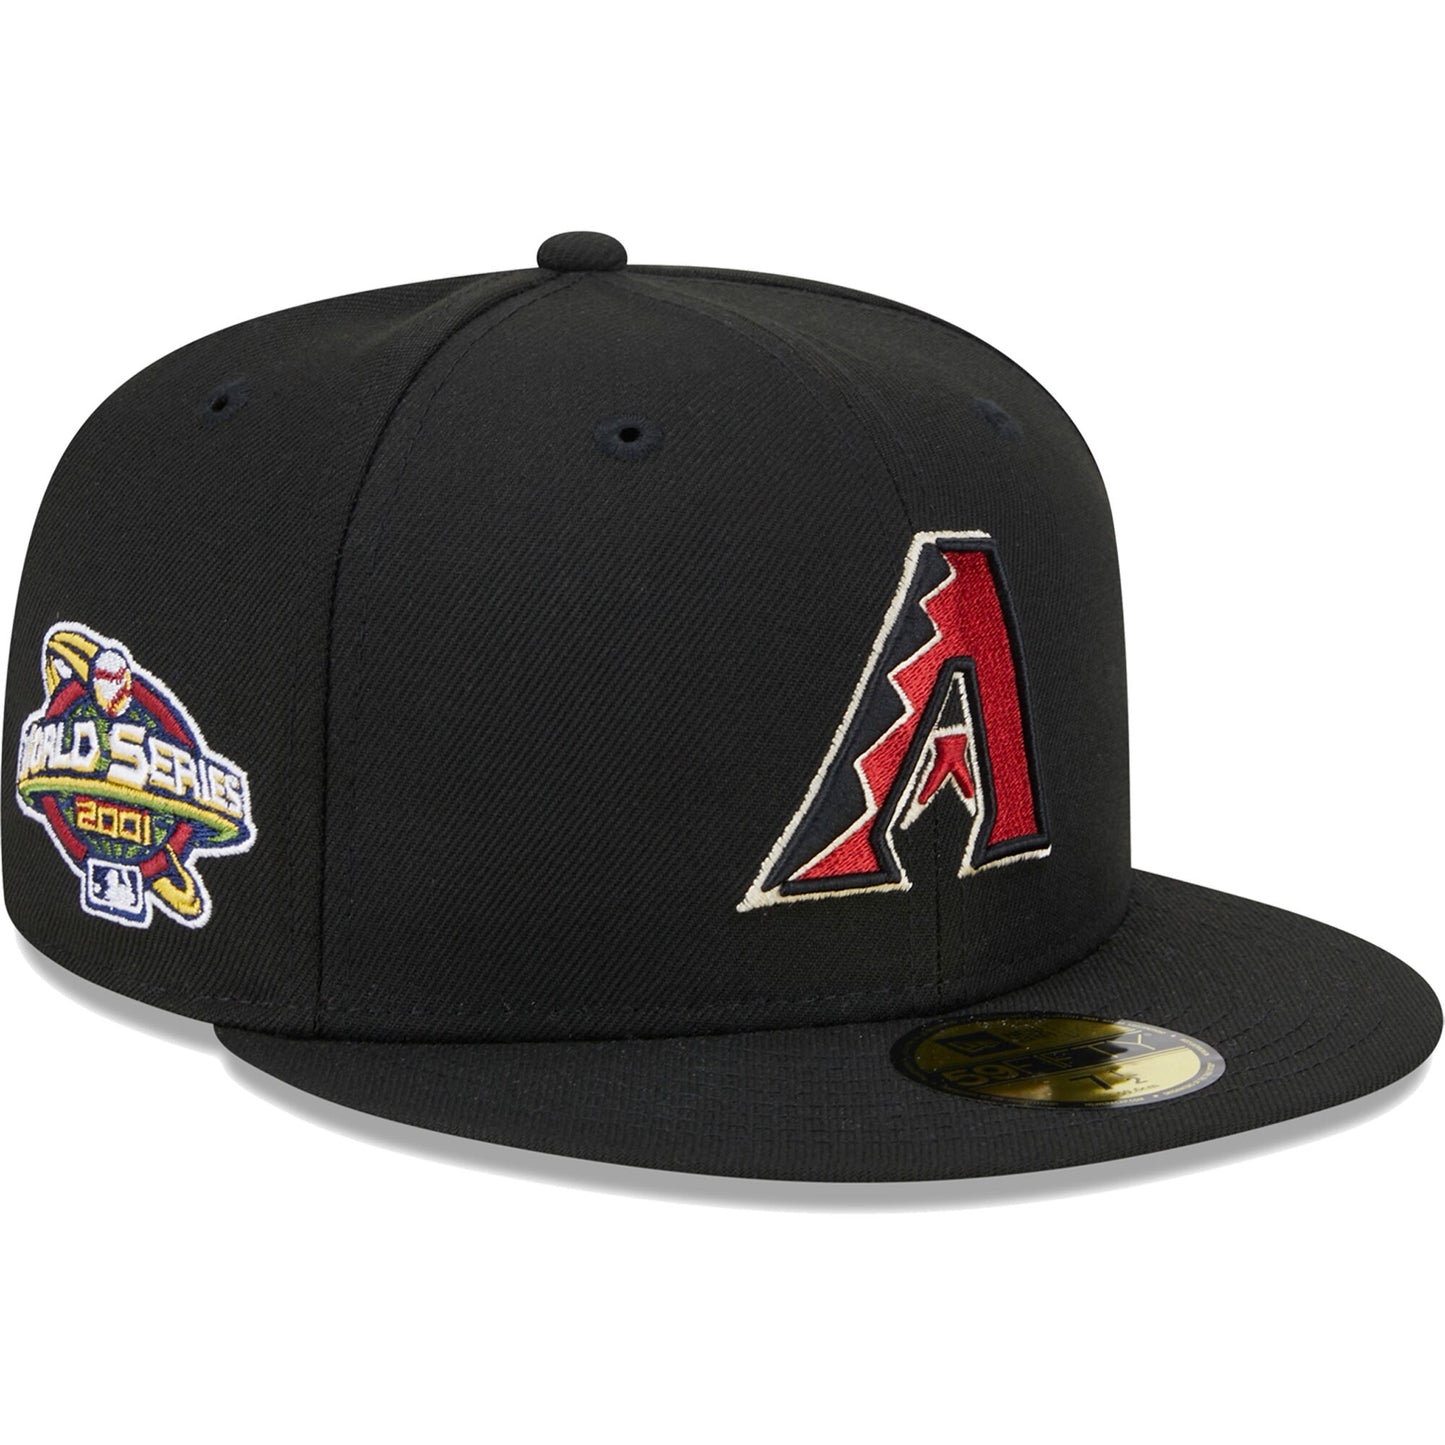 Arizona Diamondbacks New Era 2001 World Series Team Color 59FIFTY Fitted Hat - Black